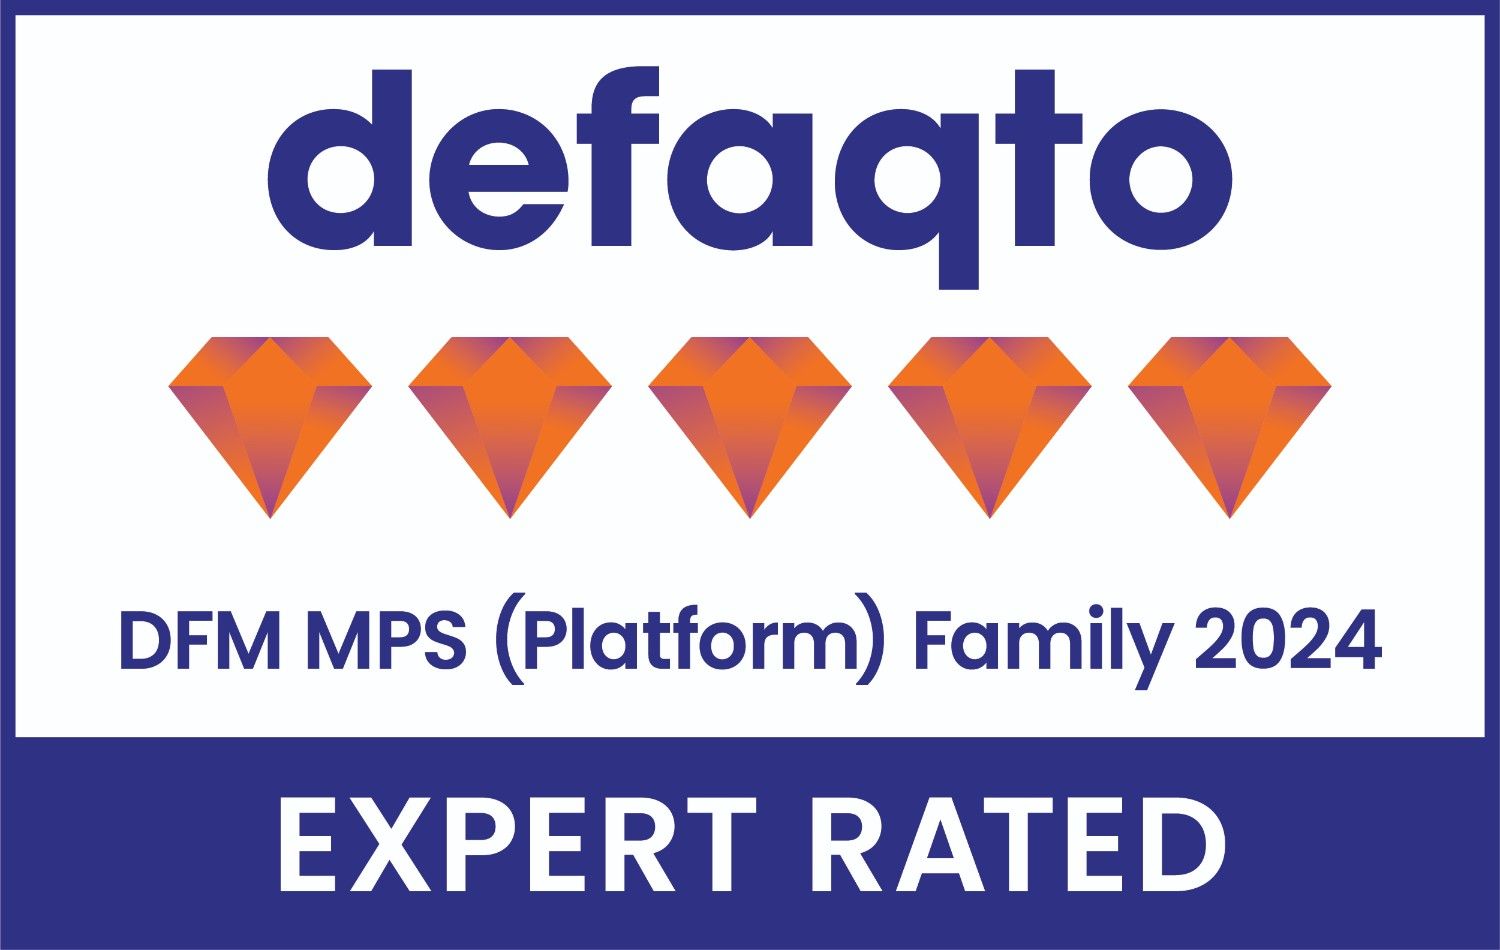 DEFAQTO EXPERT RATED DFM MPS PLATFORM FAMILY 2024